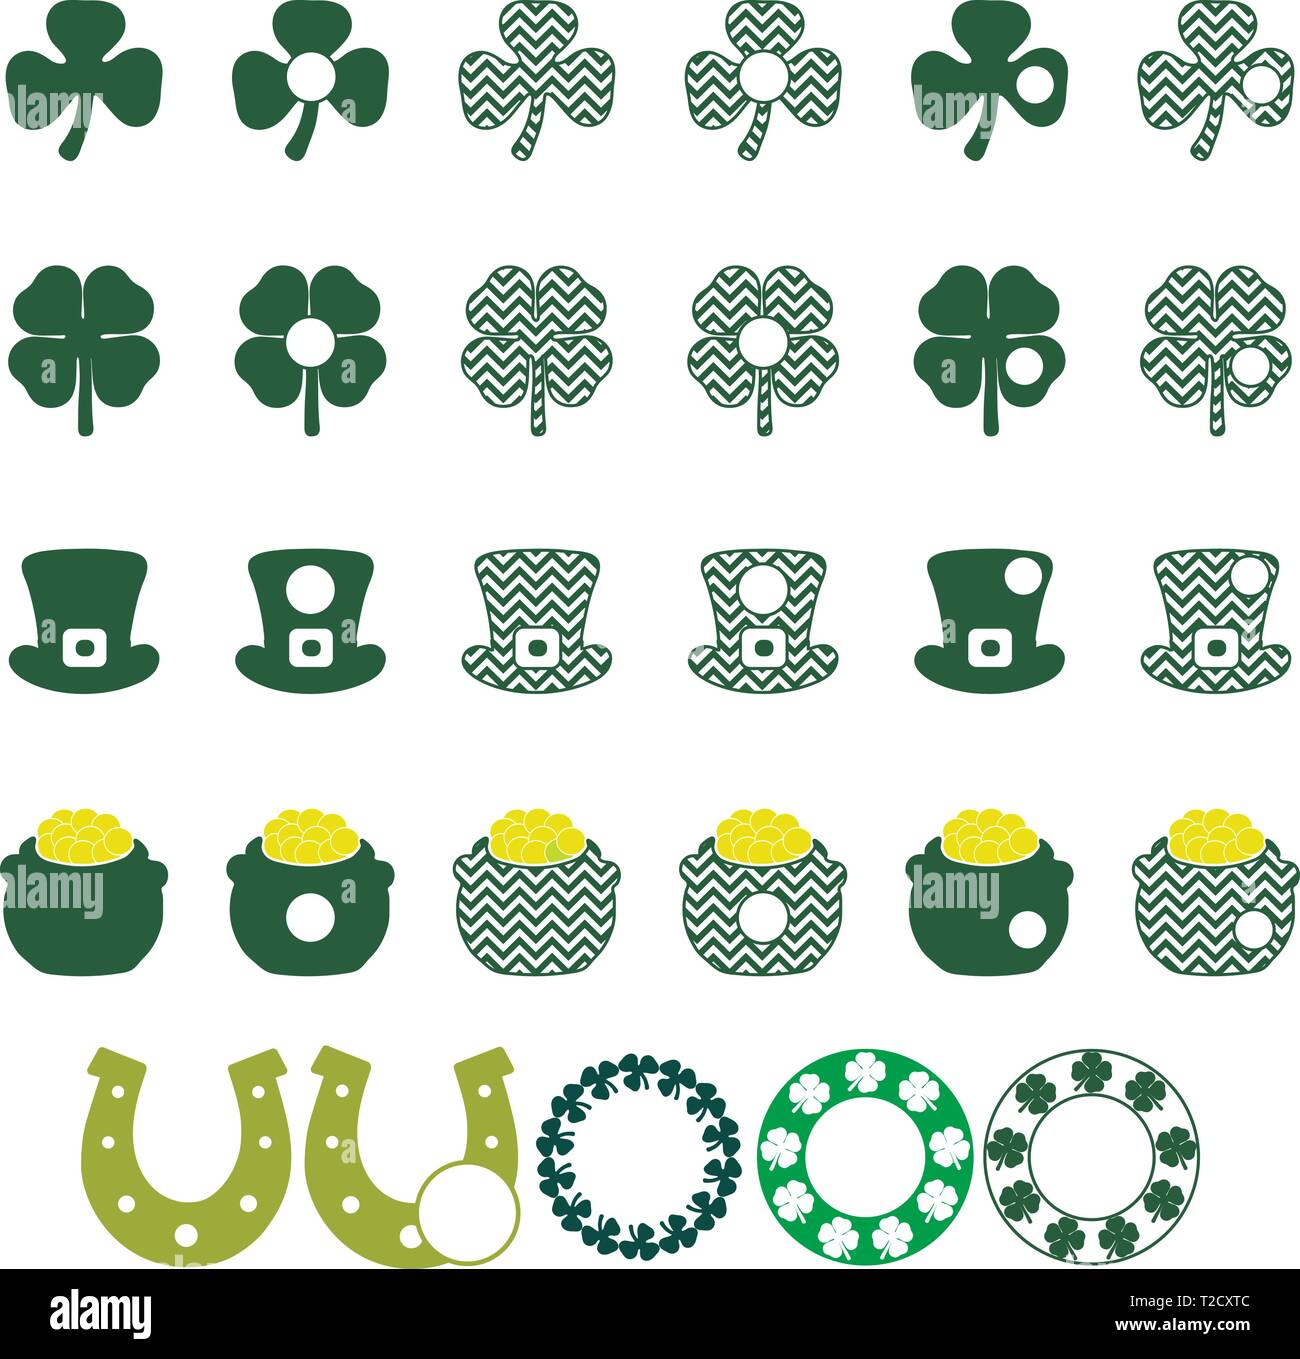 St. Patricks Day luck of the irish poster design. 4939740 Vector